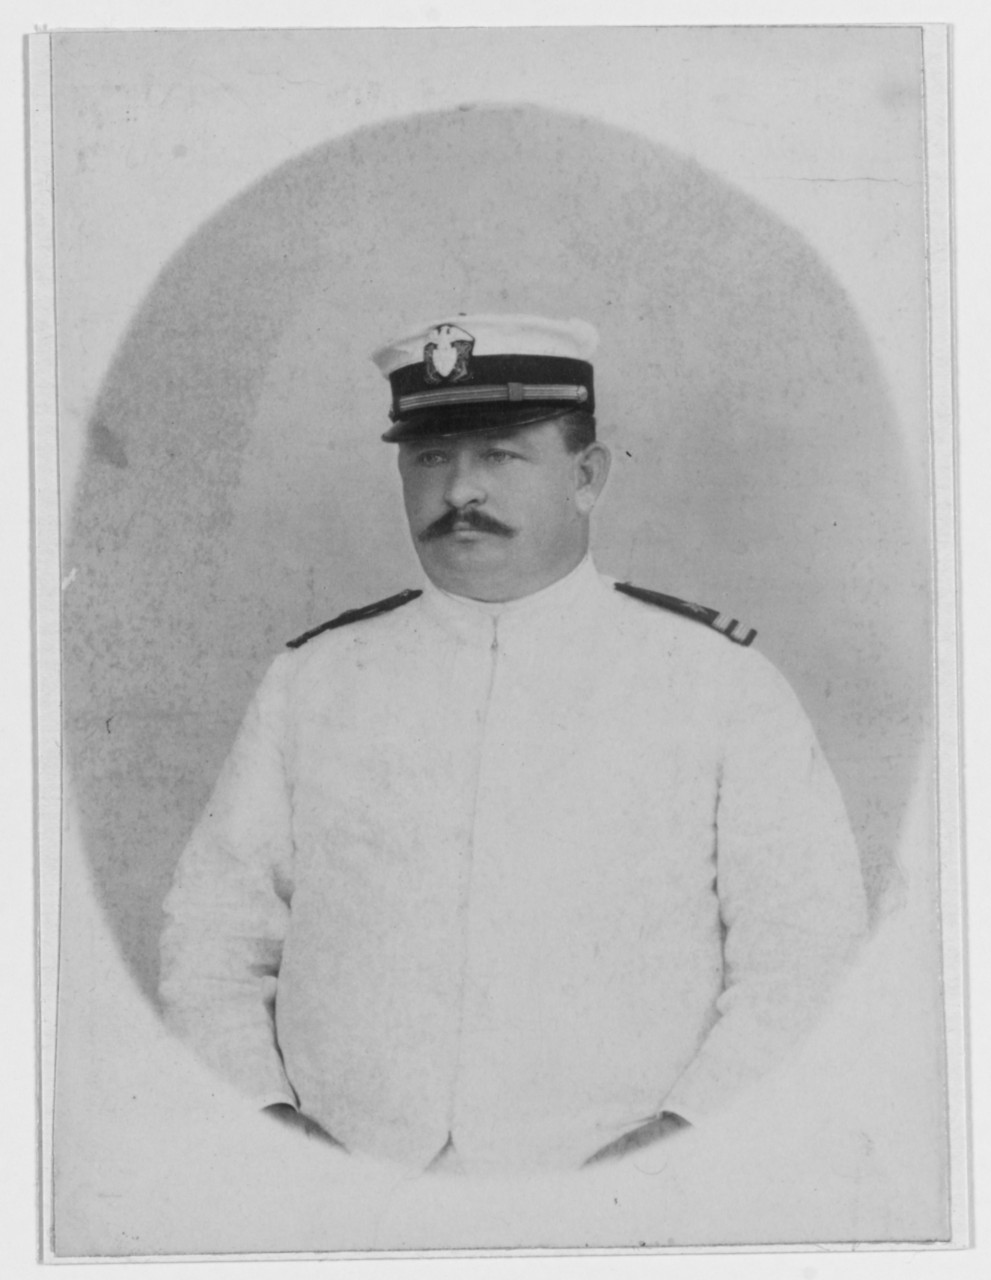 Lieutenant Augustus N. Mayer, USN